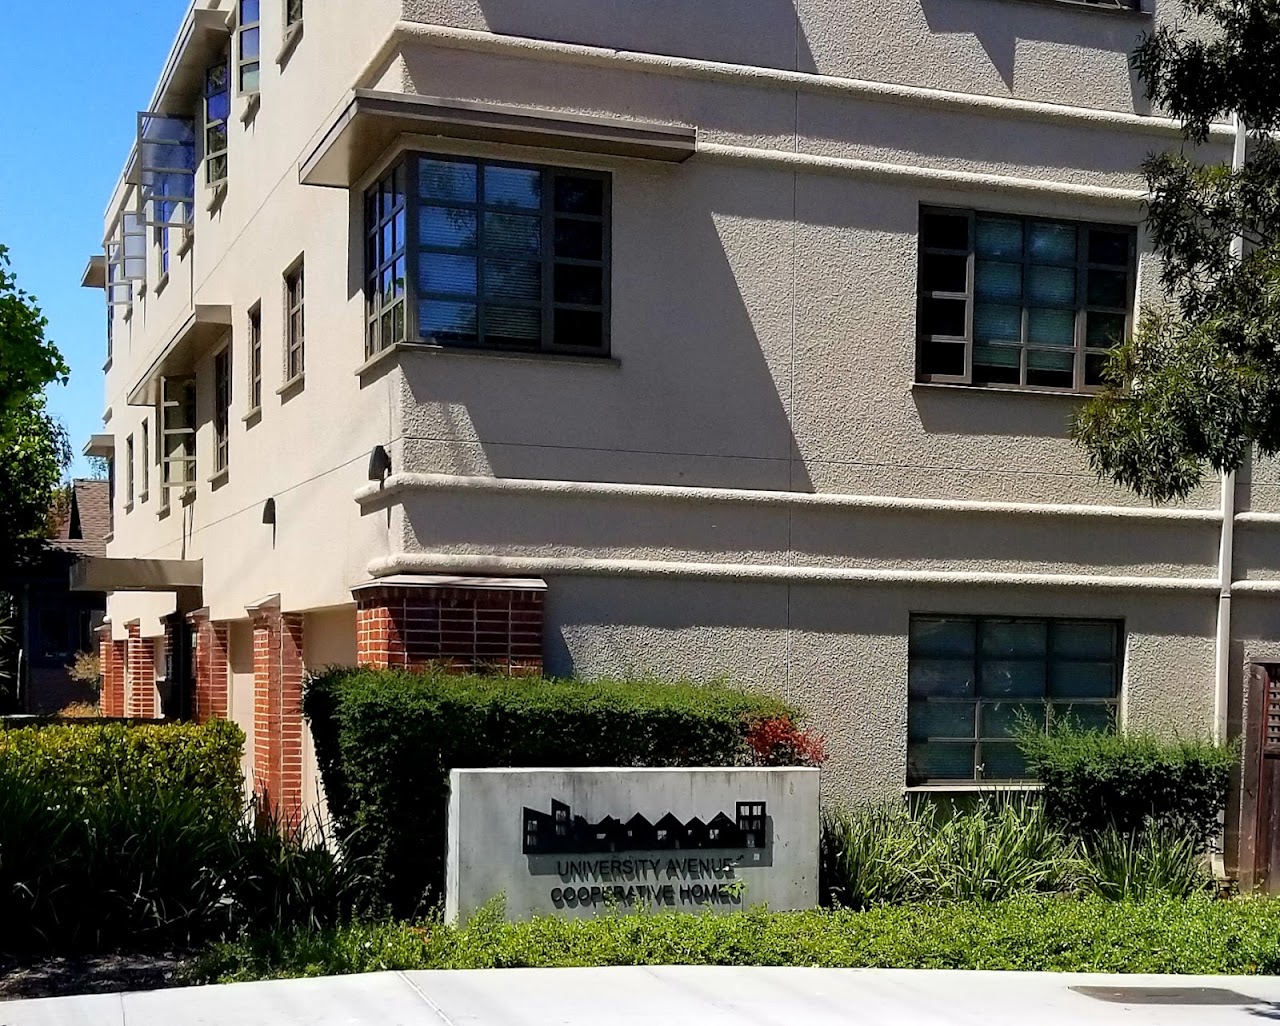 Photo of UNIVERSITY AVENUE SENIOR HOUSING. Affordable housing located at 1531 UNIVERSITY AVE BERKELEY, CA 94703